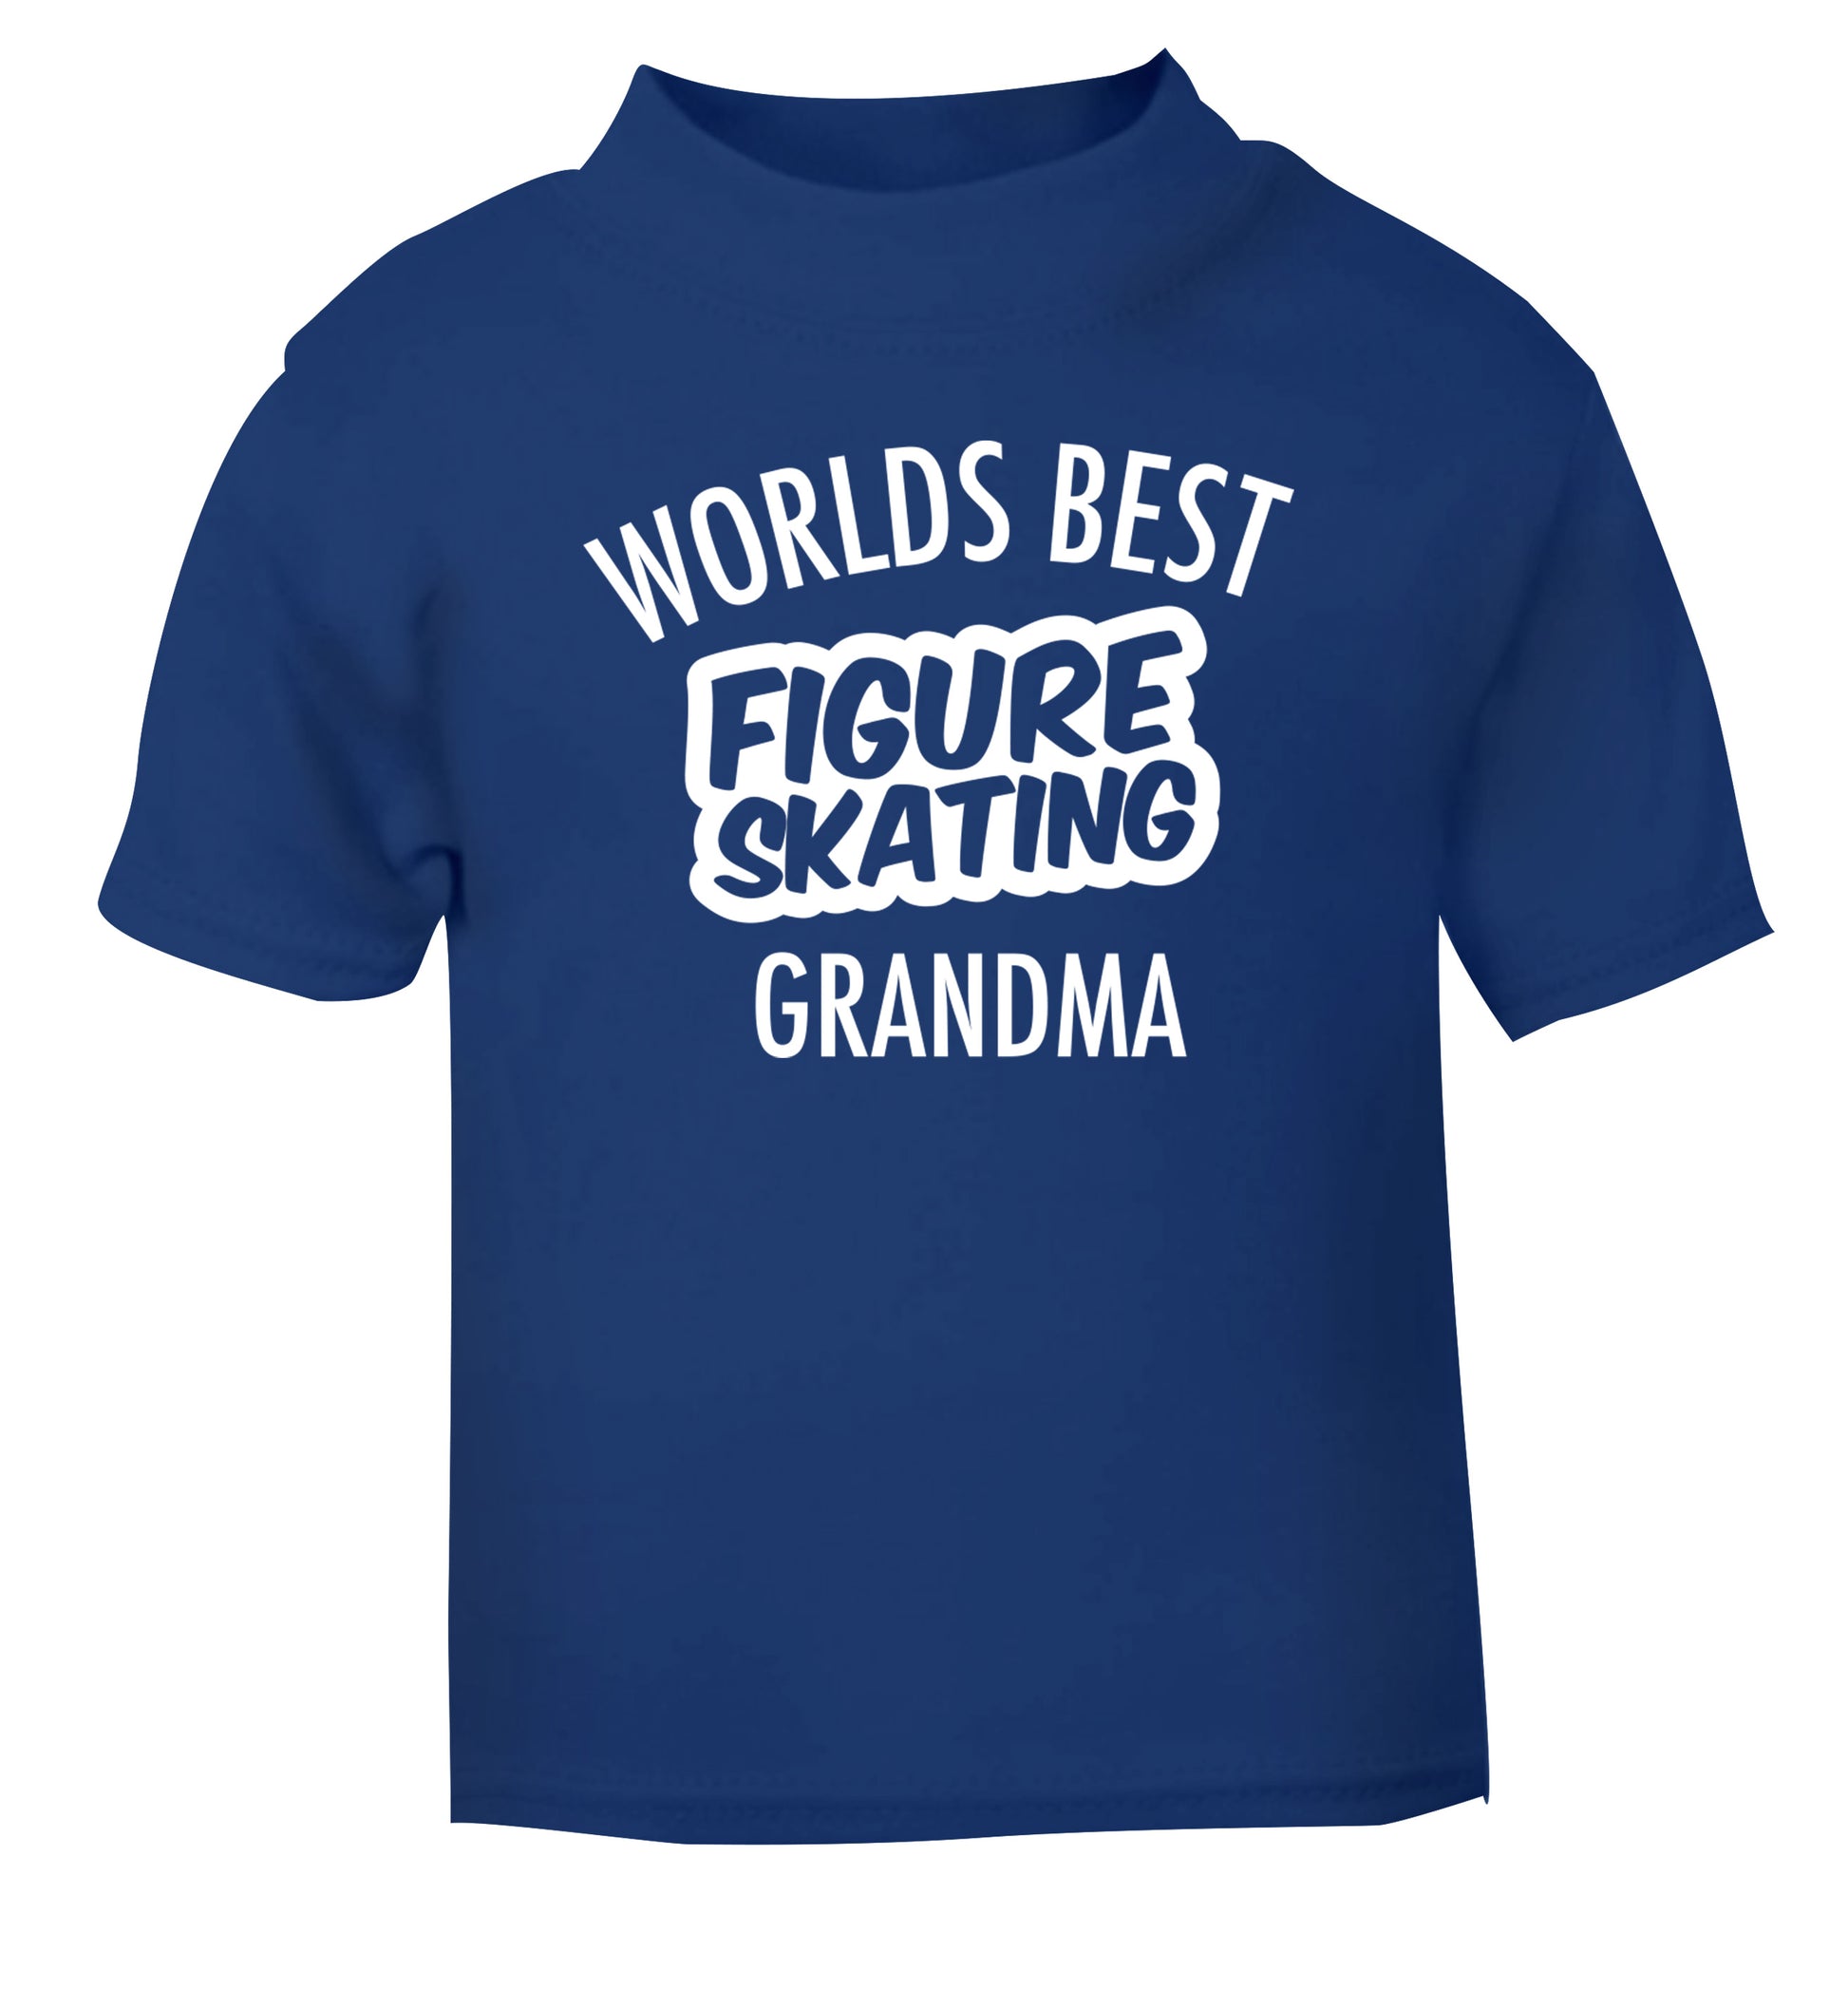 Worlds best figure skating grandma blue Baby Toddler Tshirt 2 Years